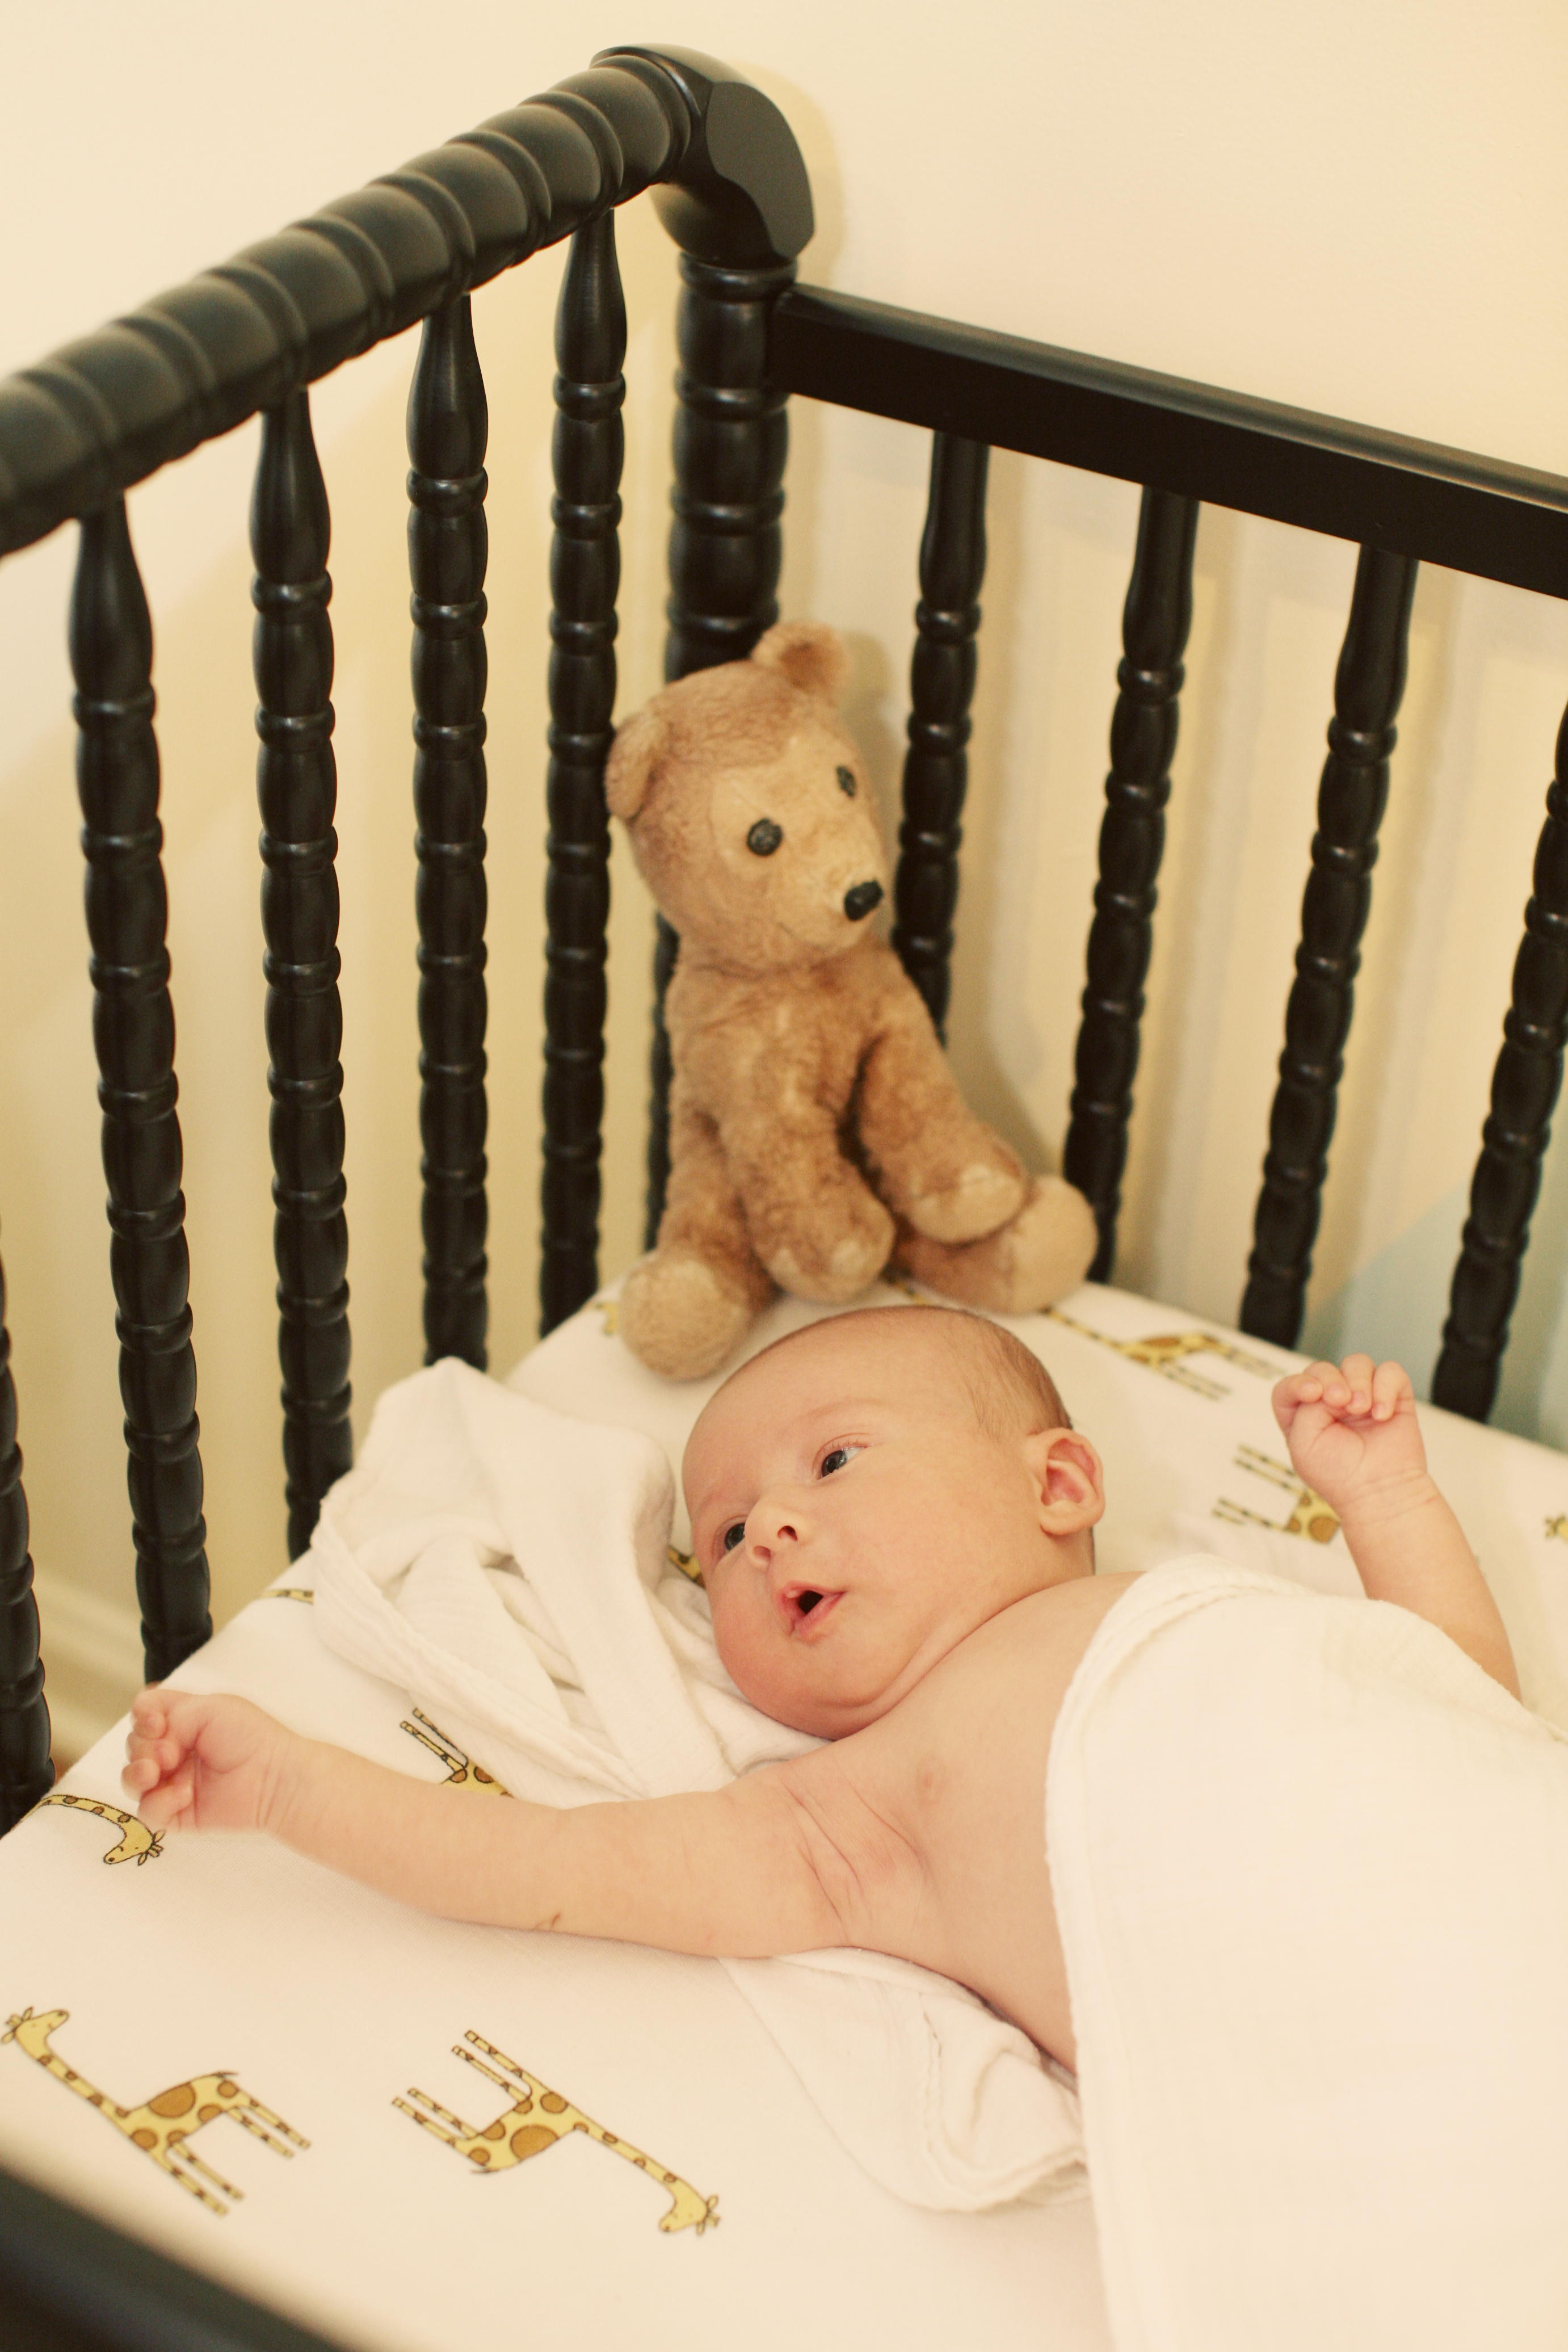 Boy Animal Theme Nursery Baby in Crib